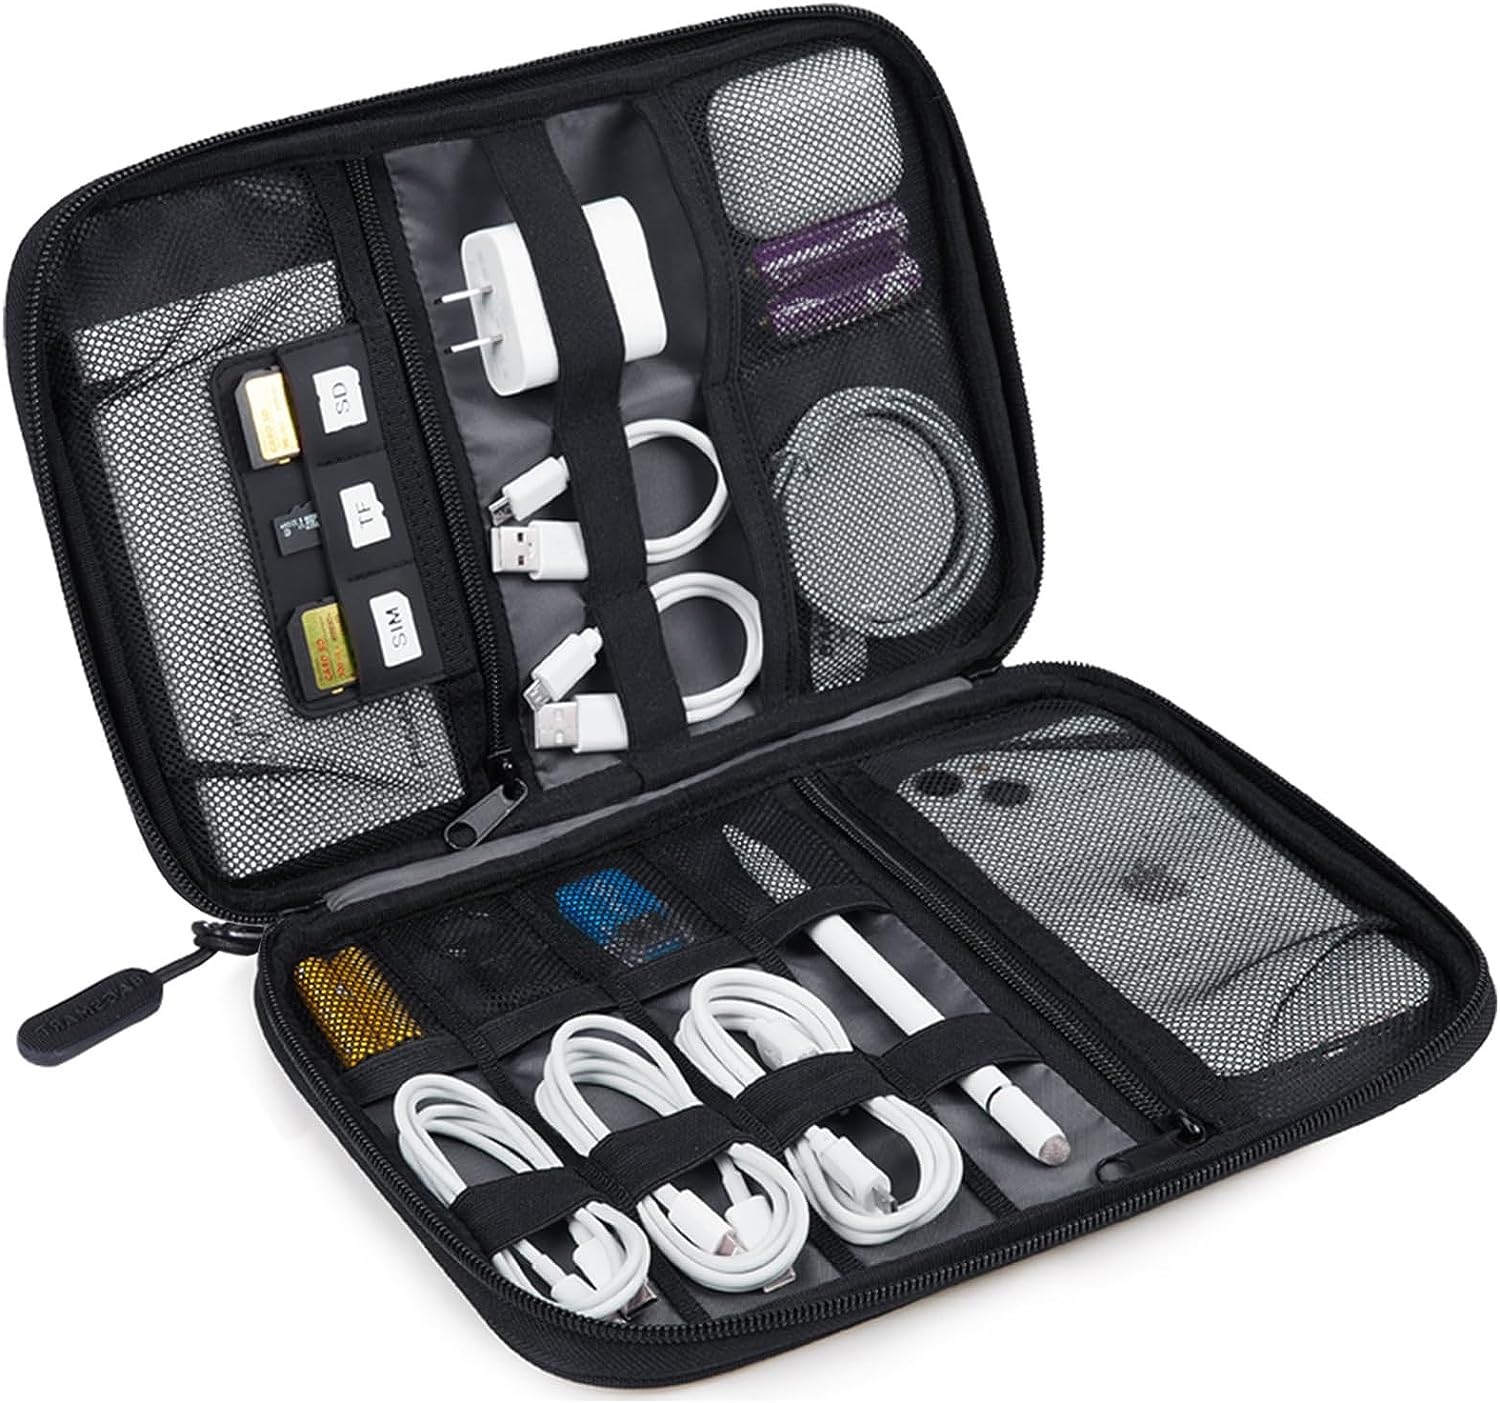 Electronics Organizer Travel Case, Small Cable Organizer Bag for Essentials